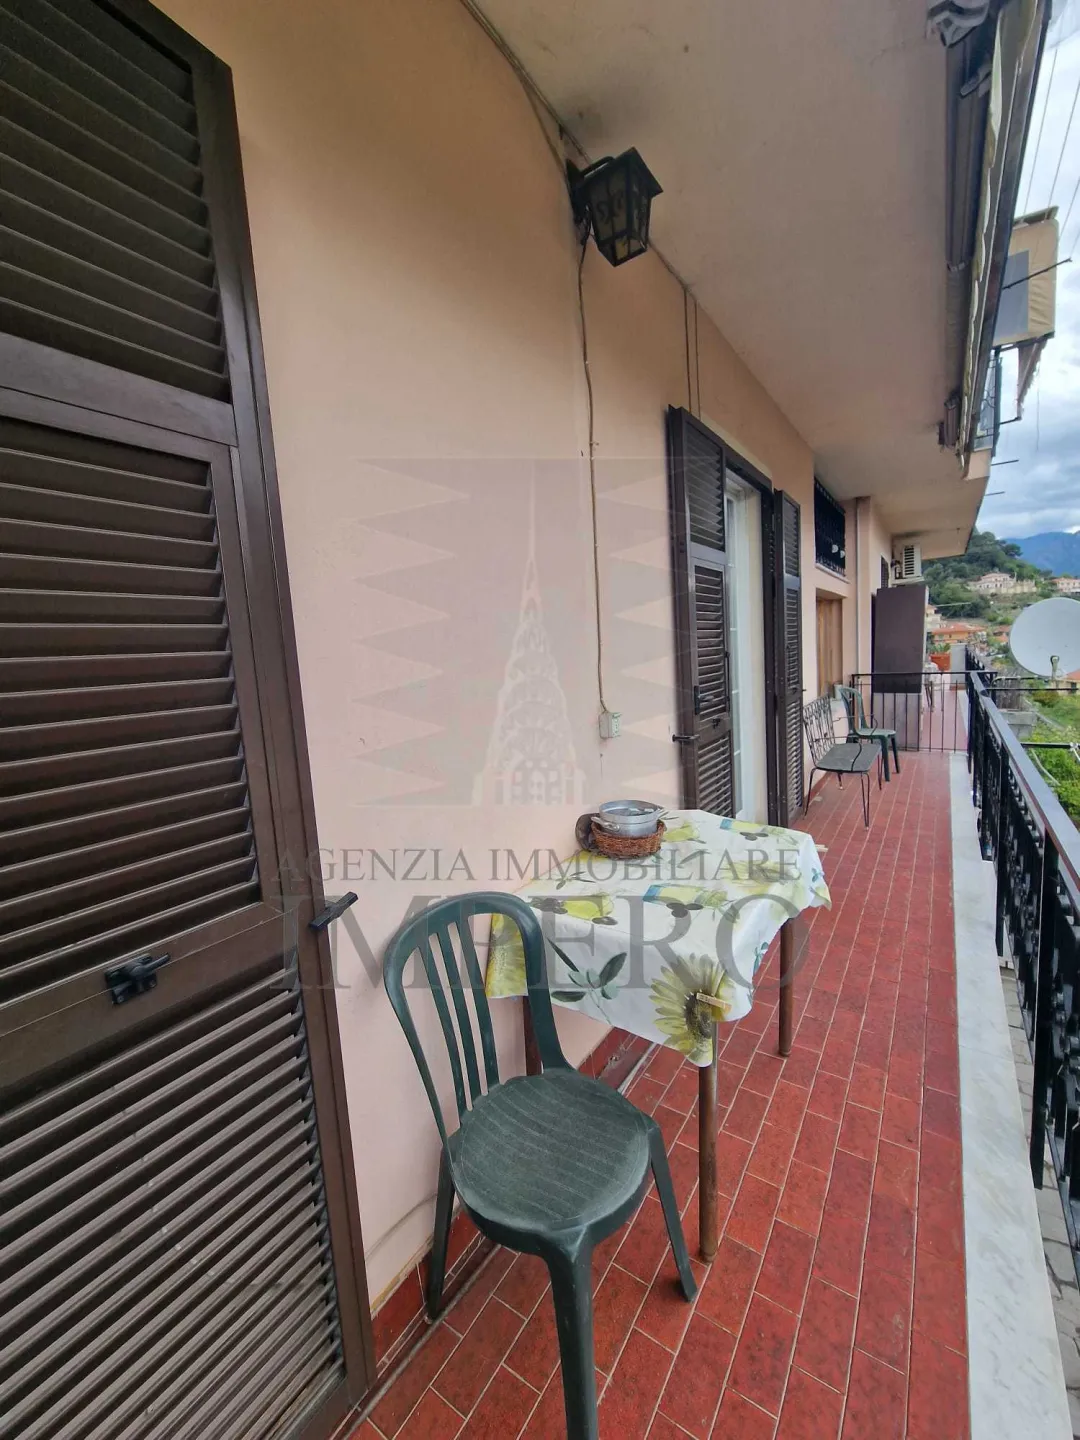 Immagine per Quadrilocale in vendita a Ventimiglia via Gallardi 133